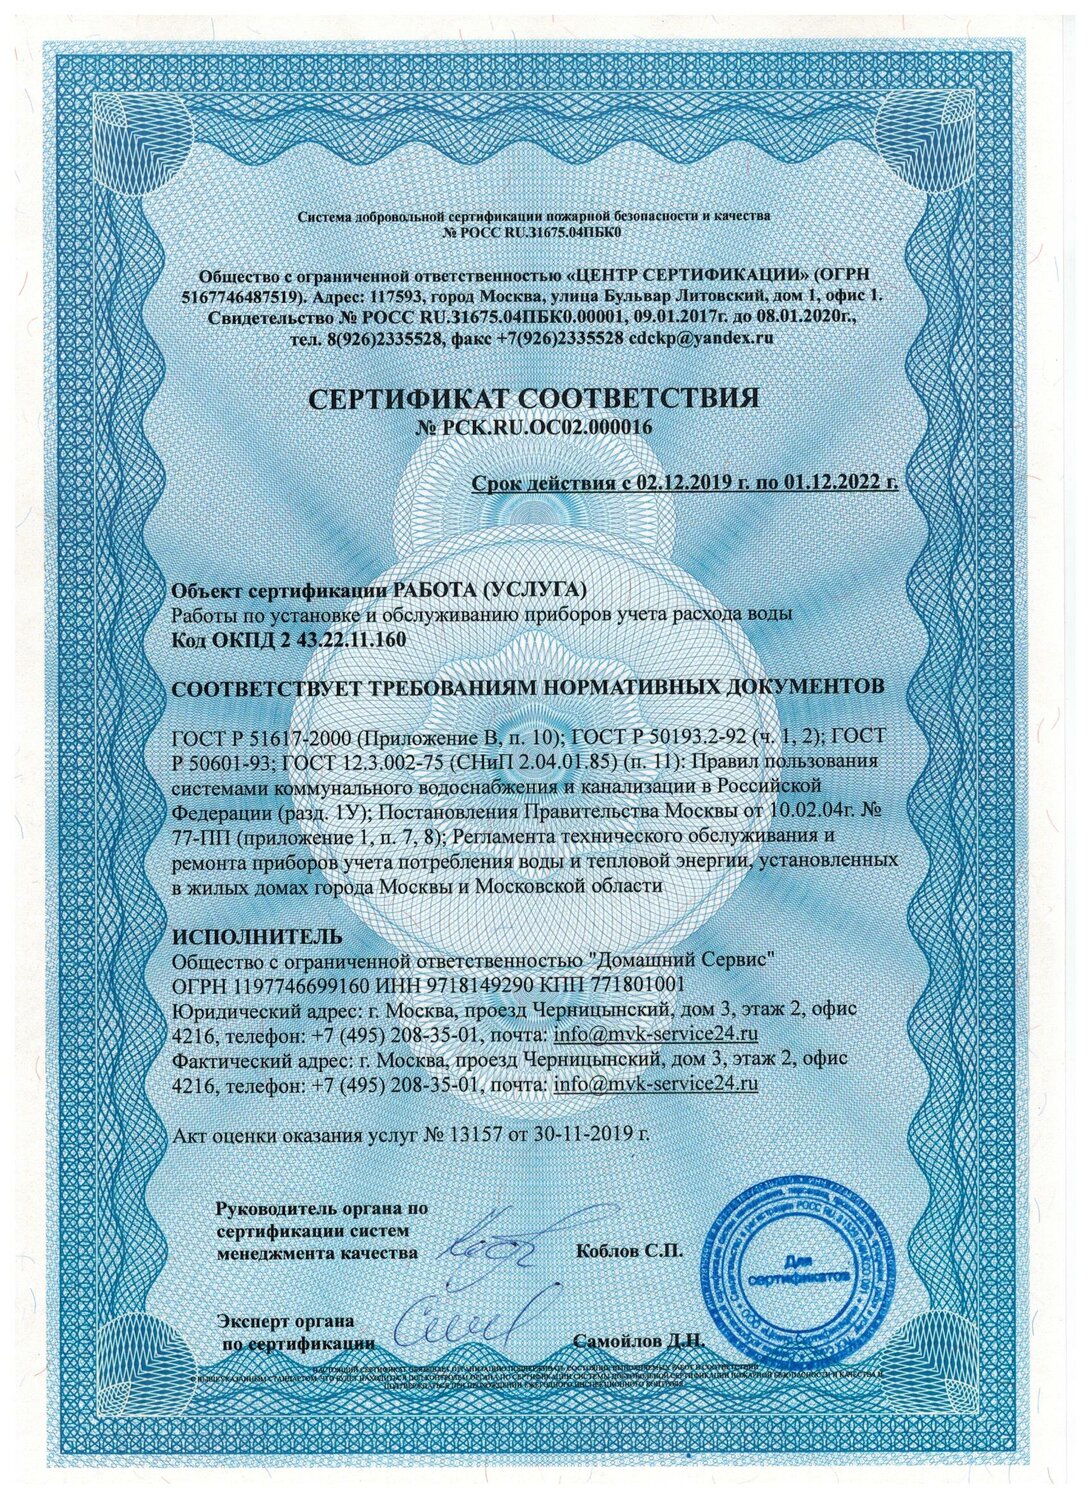 Сертификат  ООО "Домашний Сервис"